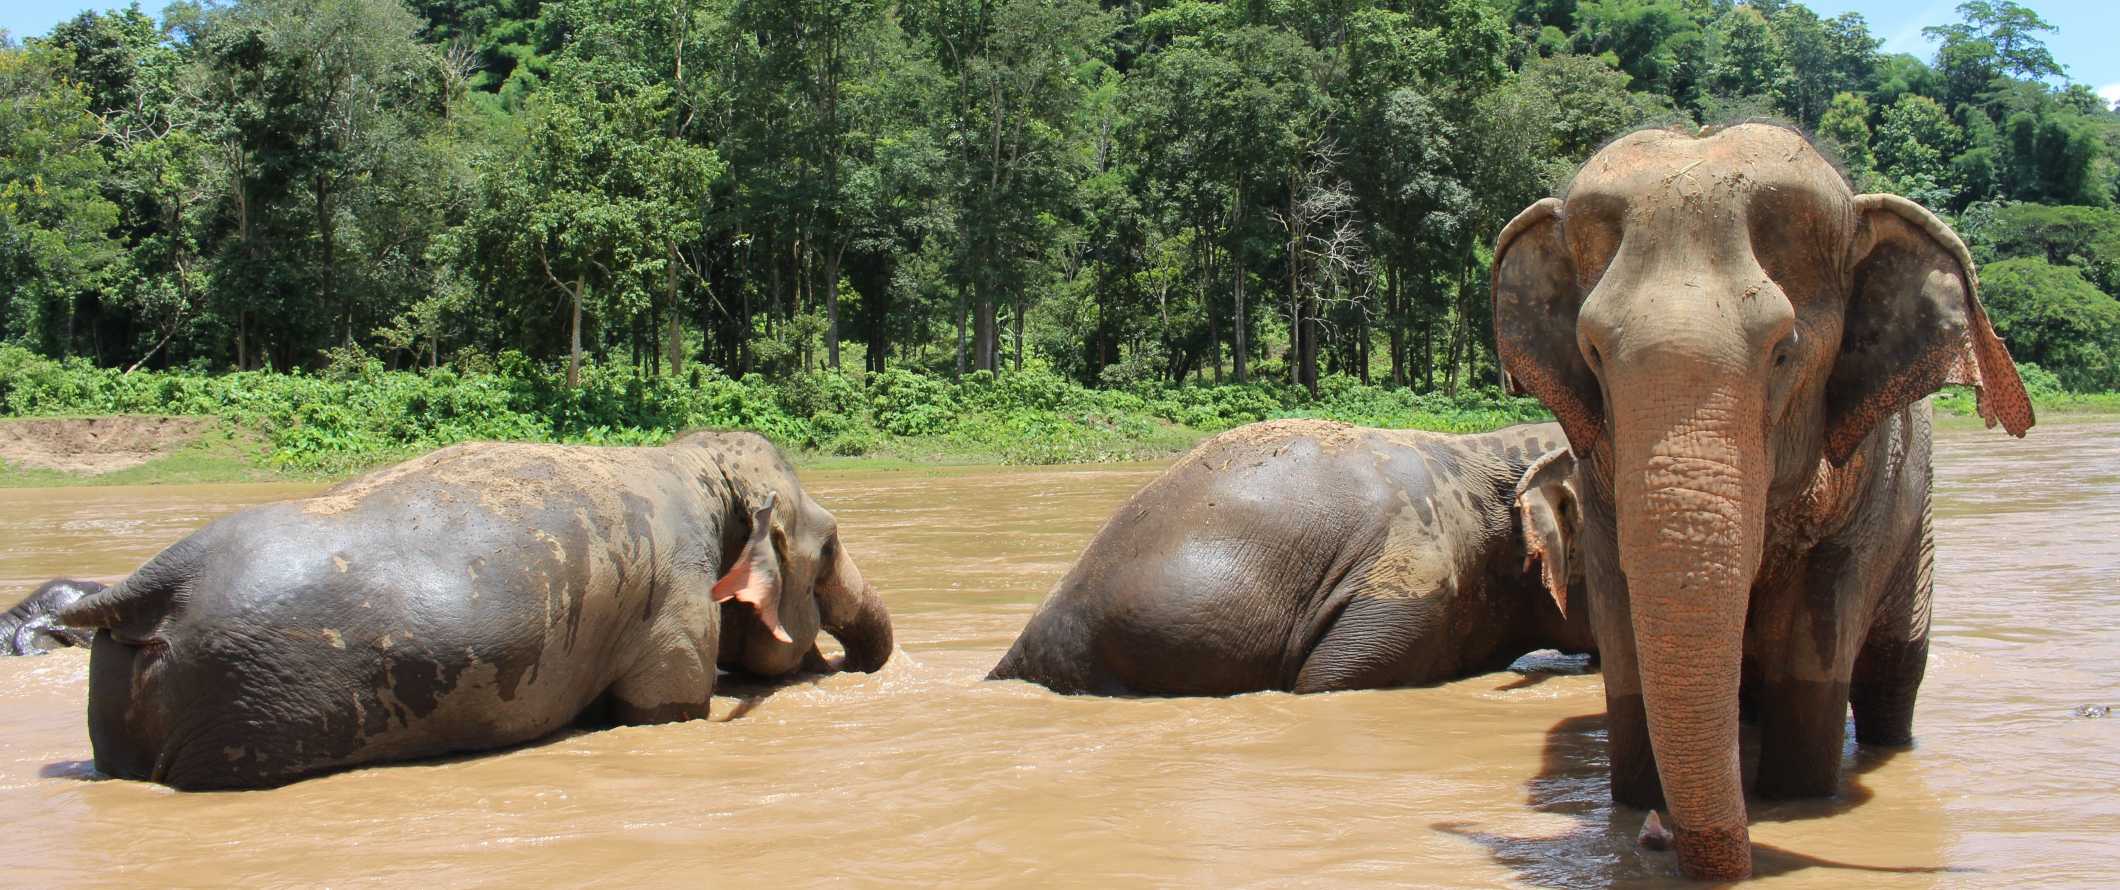 Elephants bathing in a river near Chiang Mai, Thailand